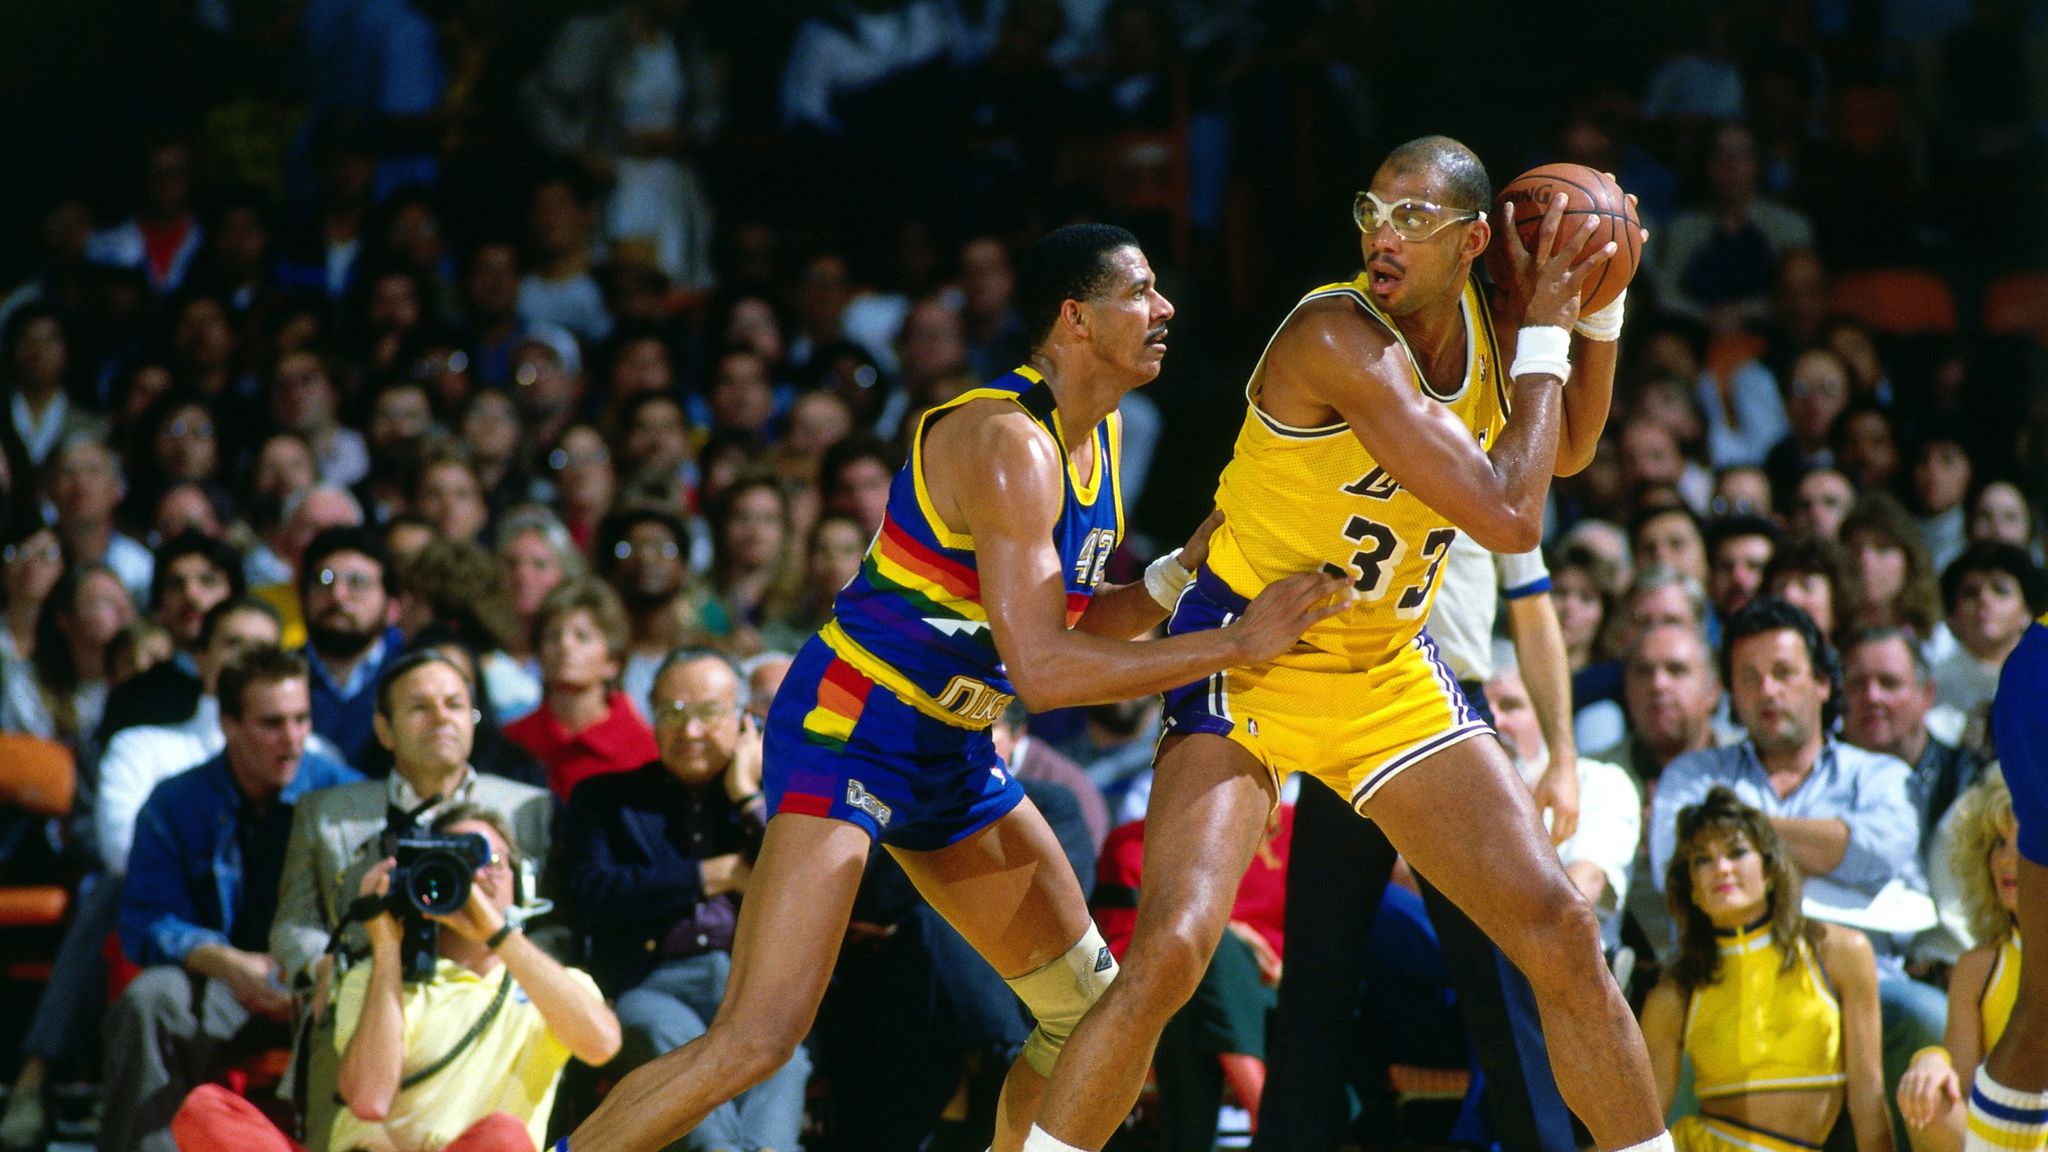 Abdul-Jabbar reunites the legendary Lakers 30 years later: Not